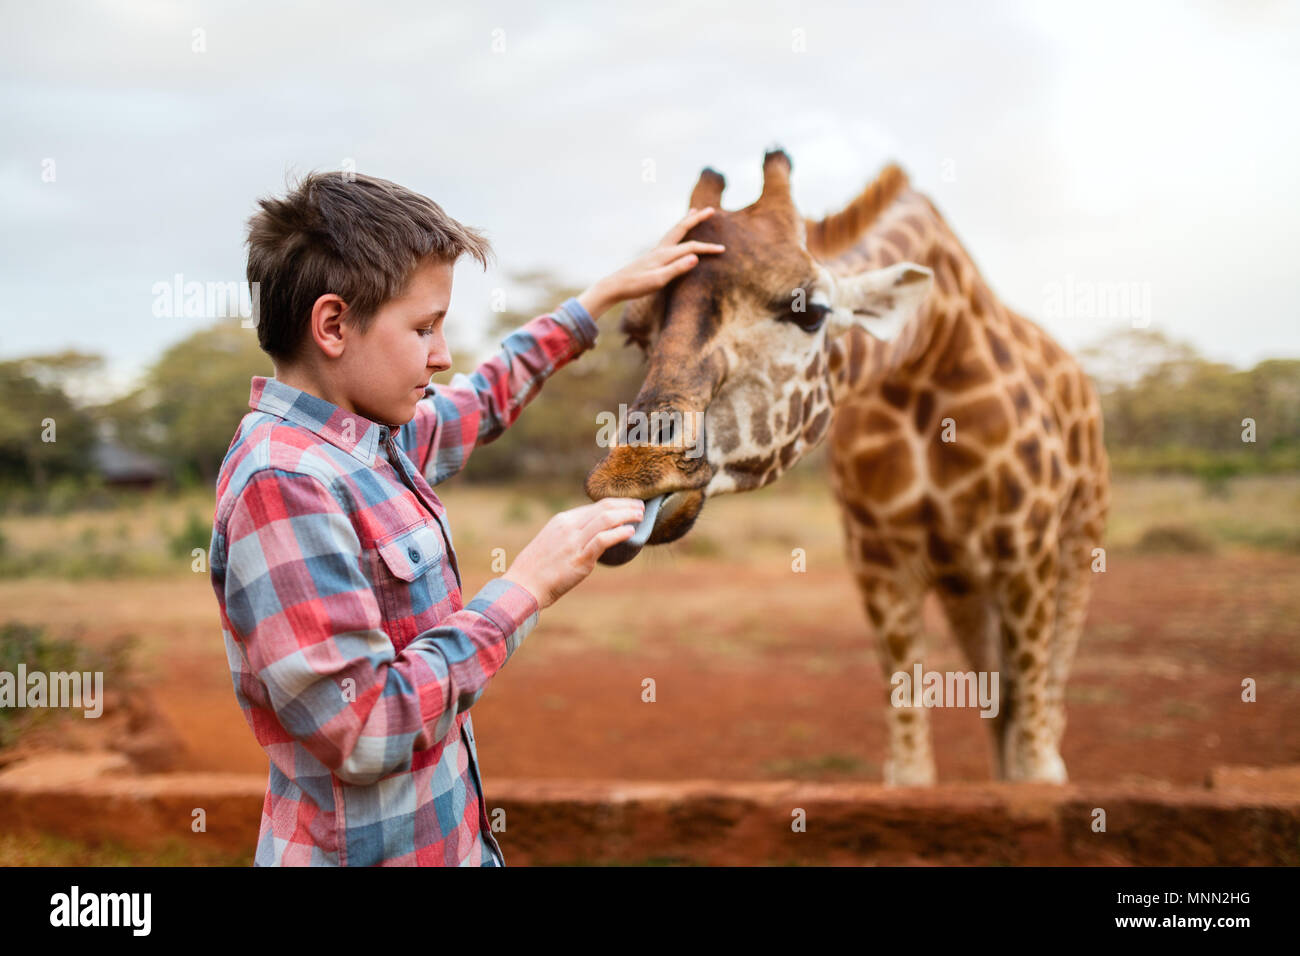 Young teenage boy feeding giraffes in Africa Stock Photo